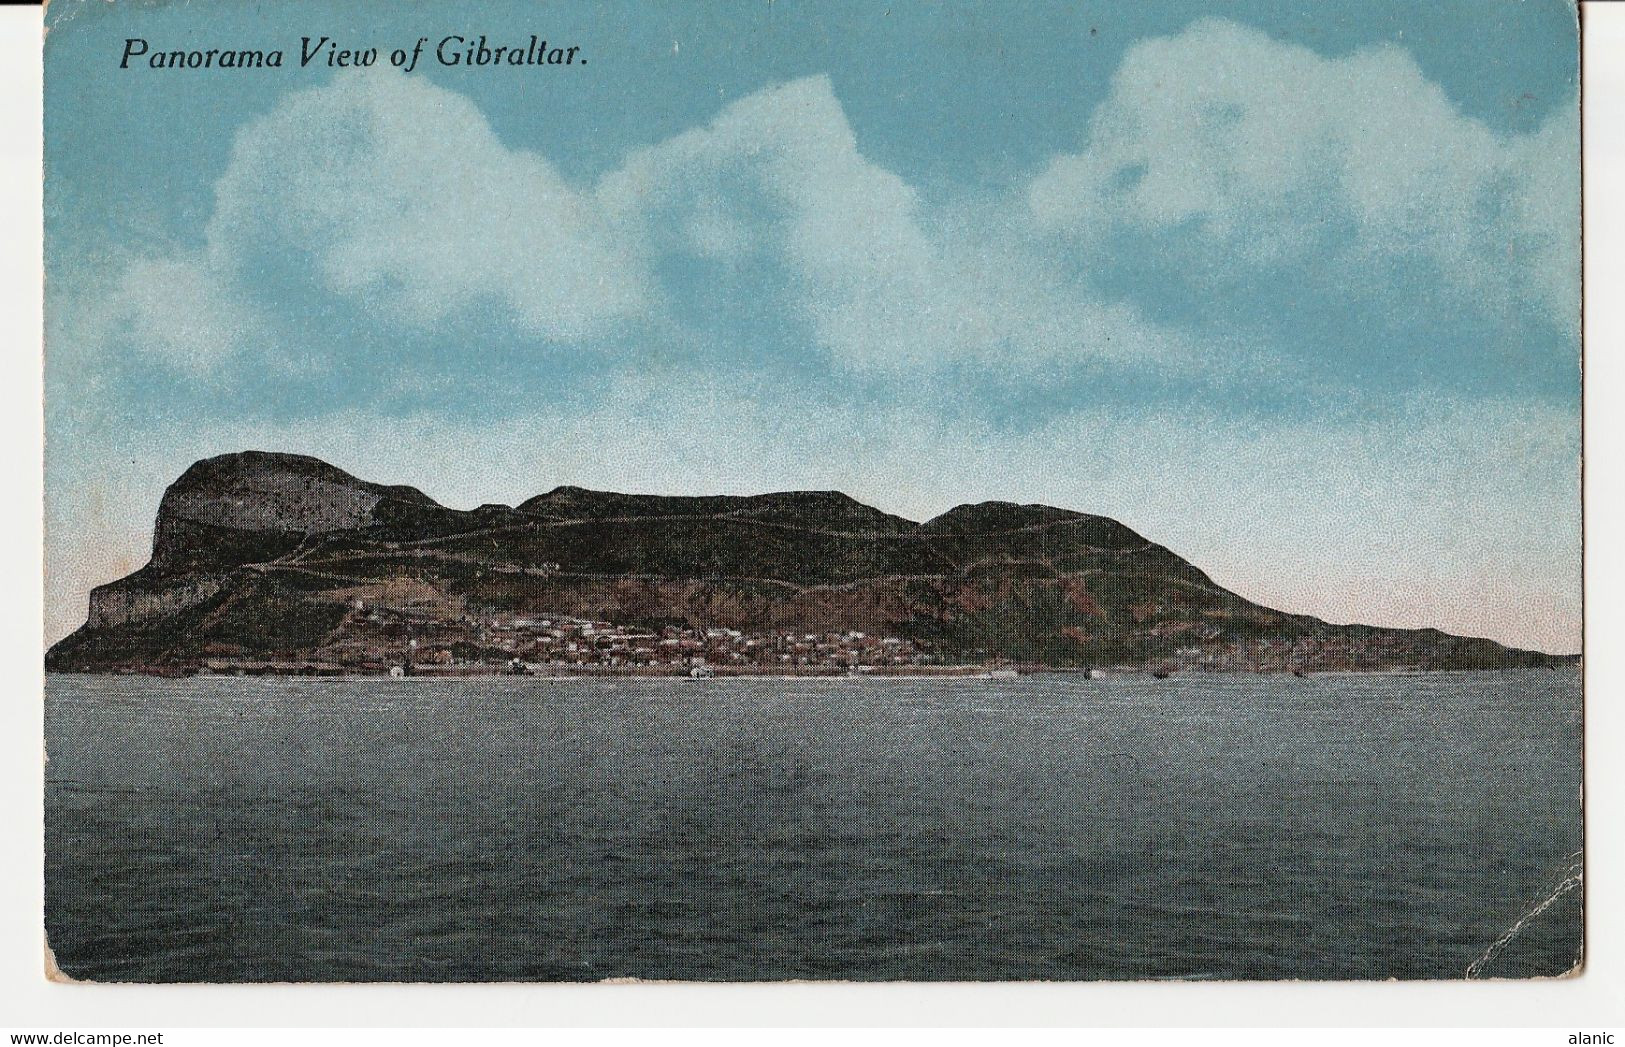 GIBRALTAR3 CPA -GIBRALTAR FROM NORTH FRONT--??//ROCK FROMTHE NEW BRIDGE CIRCULEE 1907-//PANORANA VIEW - Gibraltar